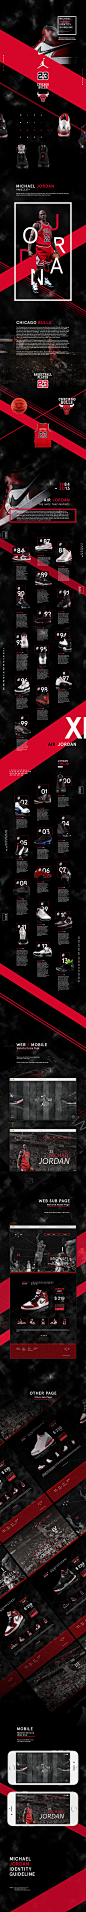 Michael Jordan Branding : Michael Jordan Identity Guideline Suggest